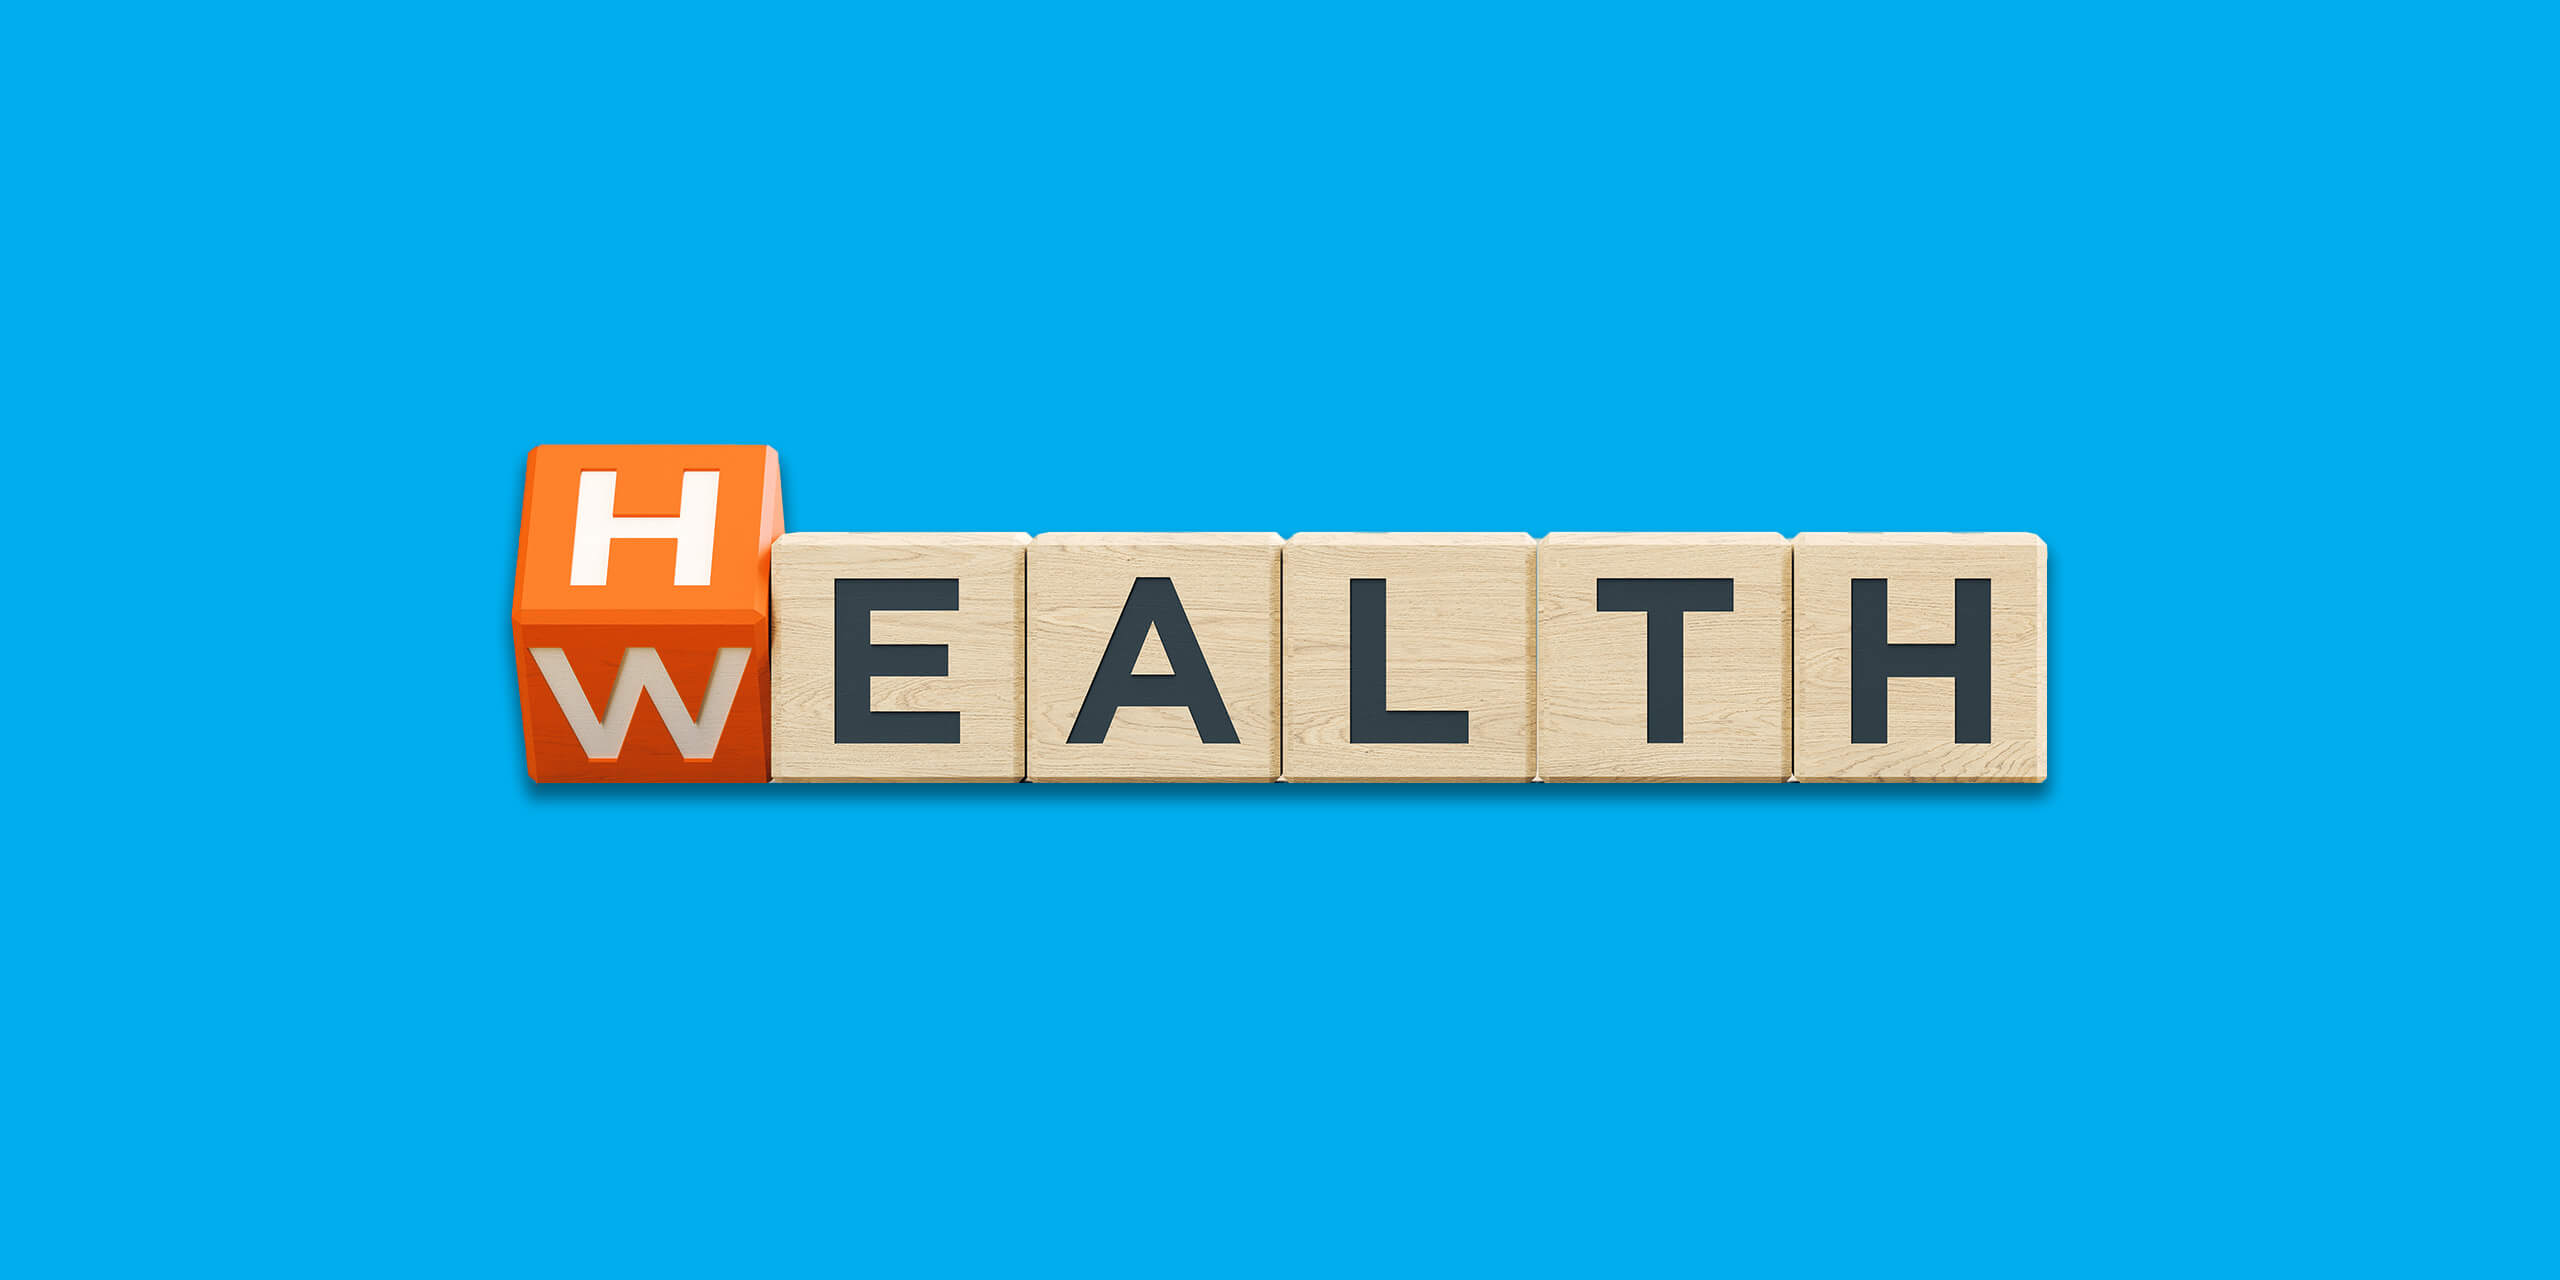 Wealth and Health written wood blocks